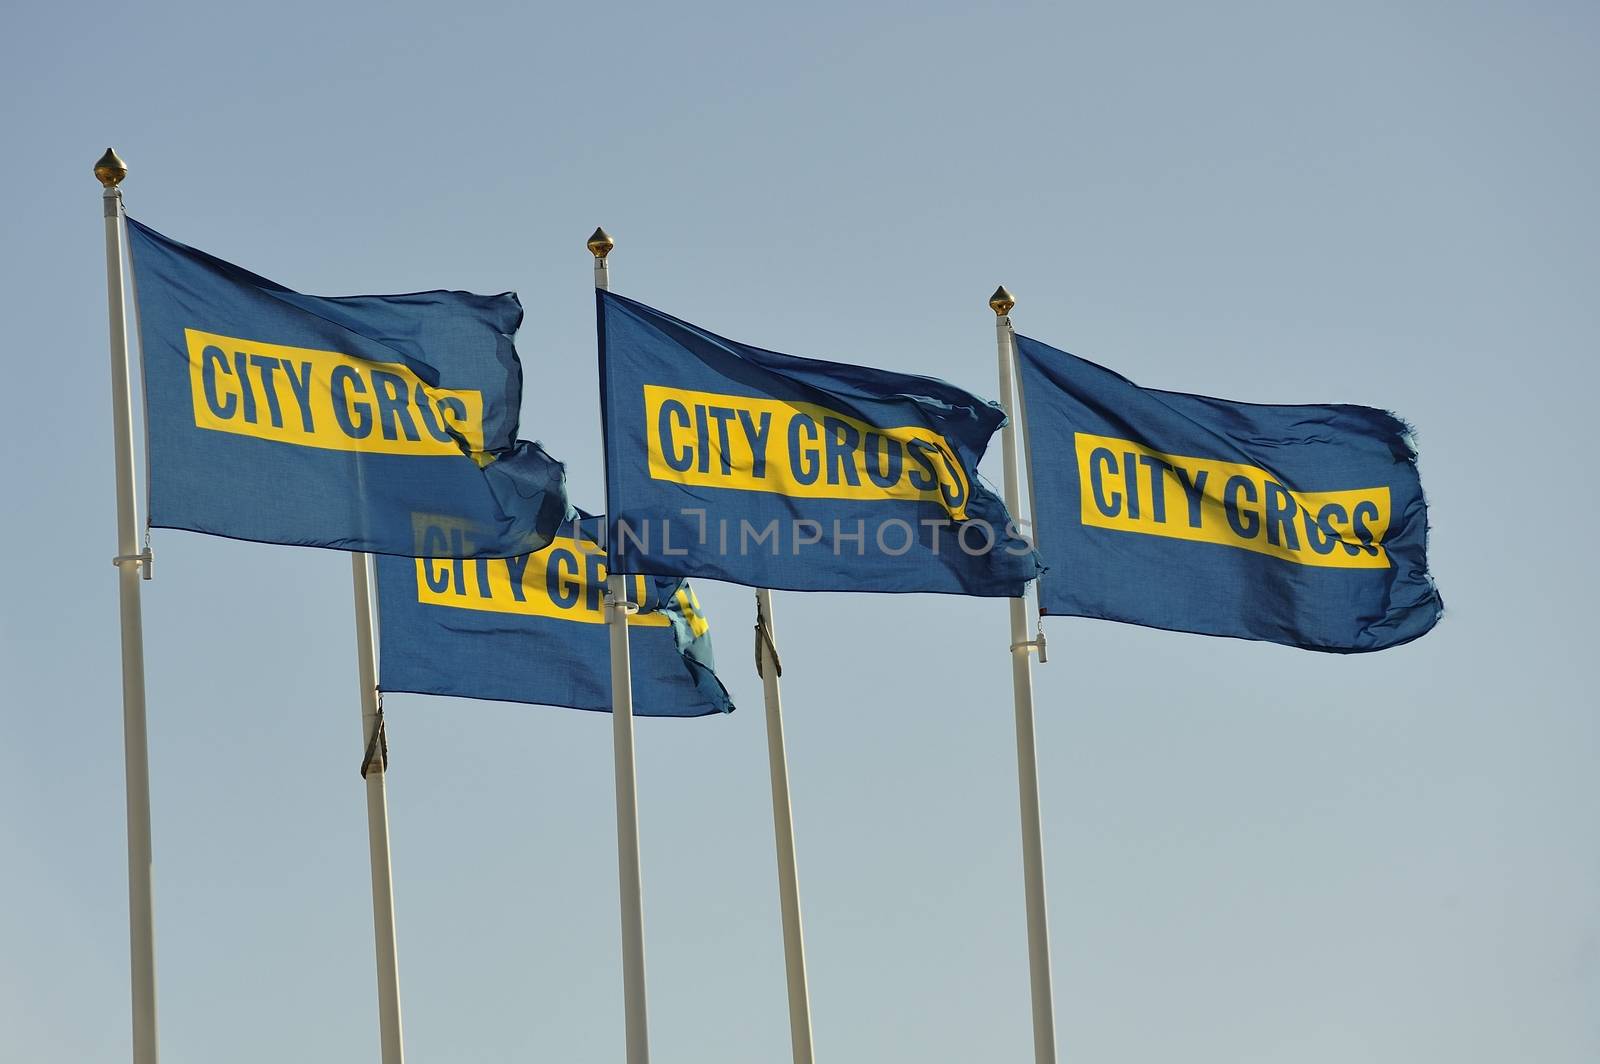 City Gross flag by a40757